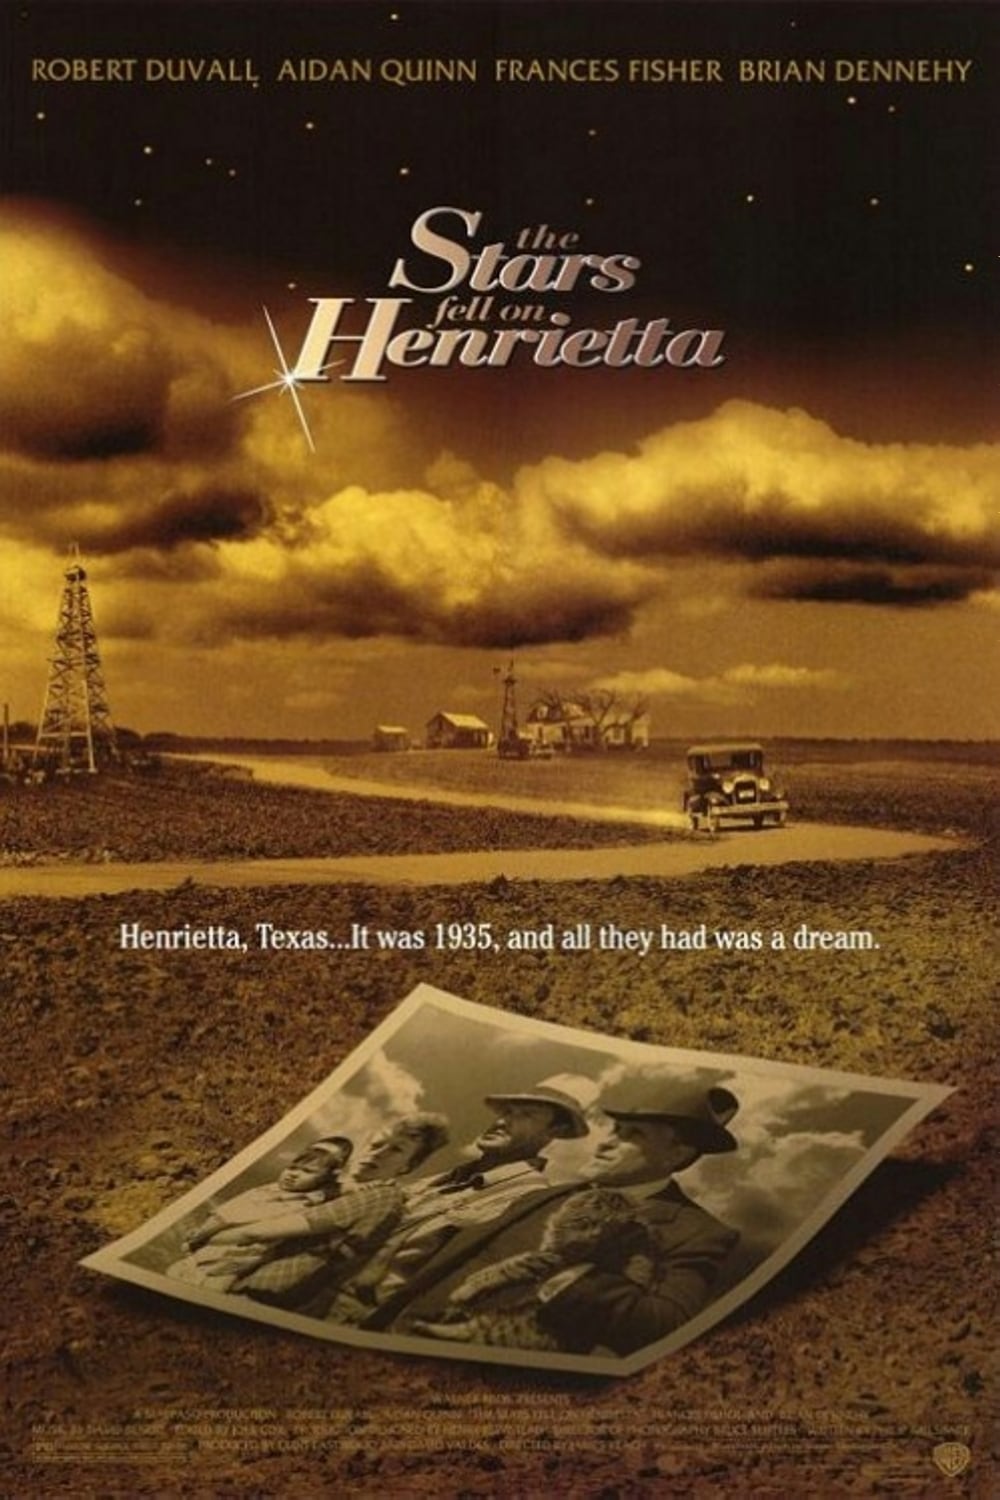 Plakat von "The Stars Fell on Henrietta"